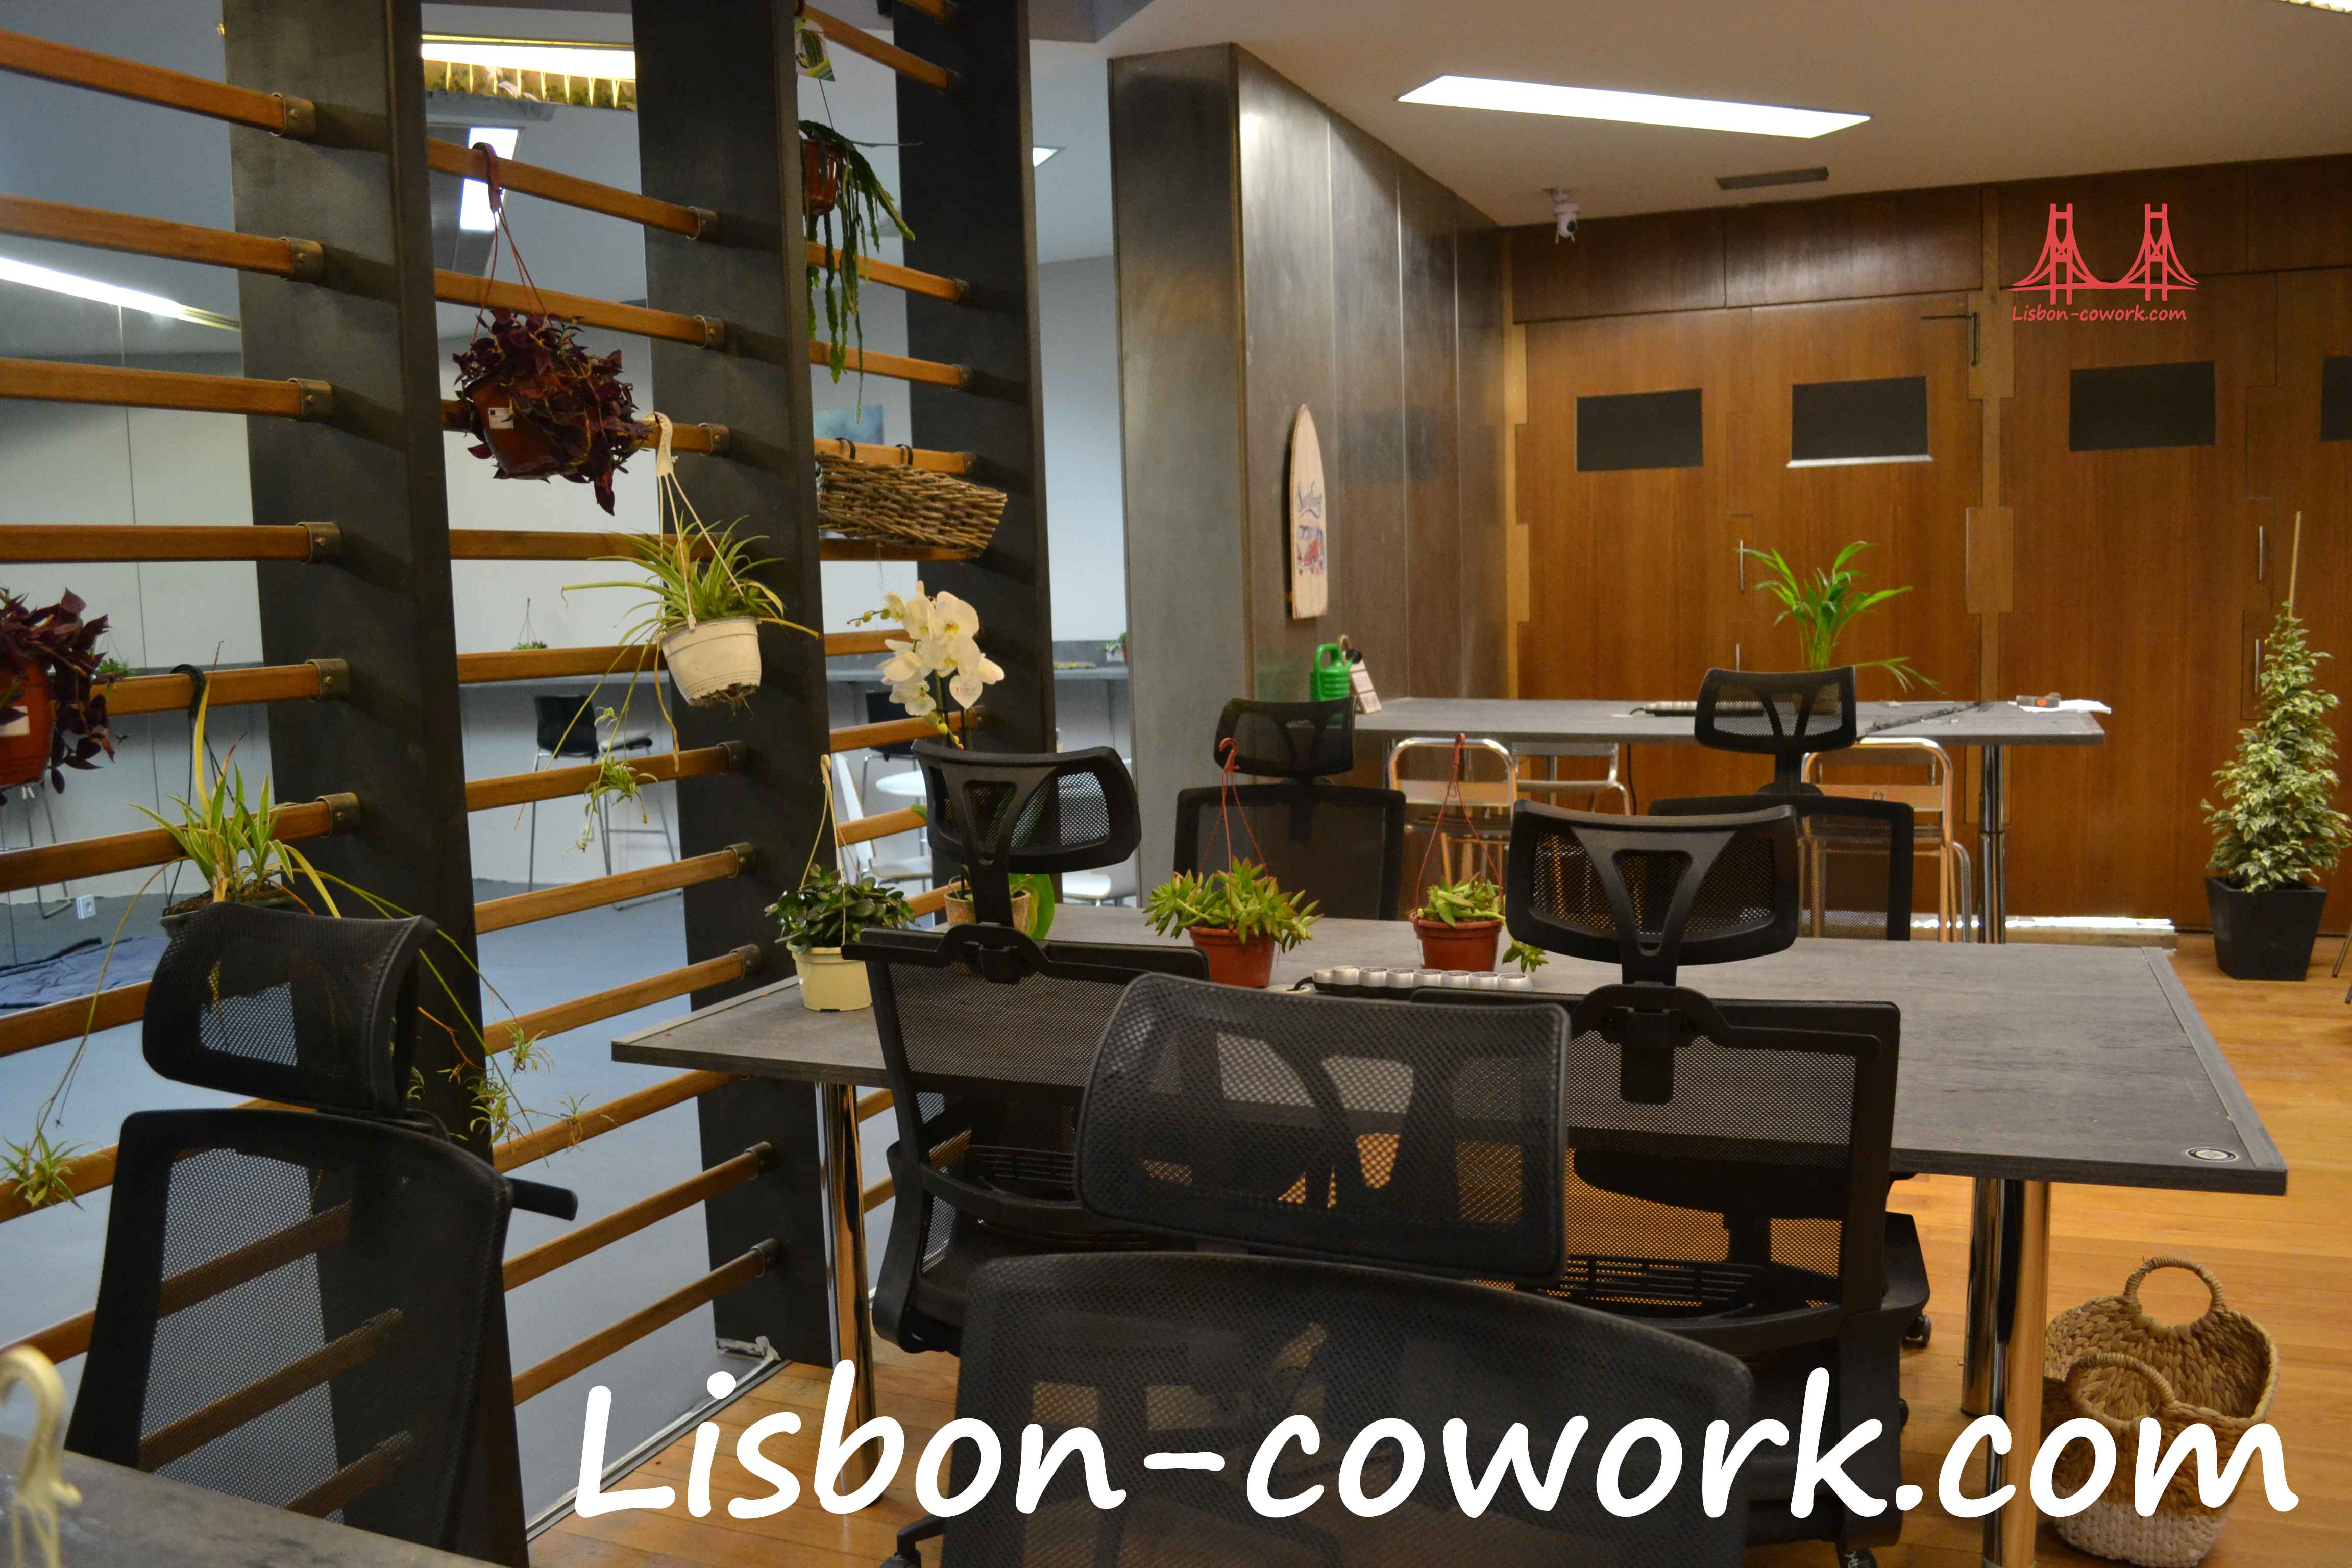 Lisbon-cowork.com